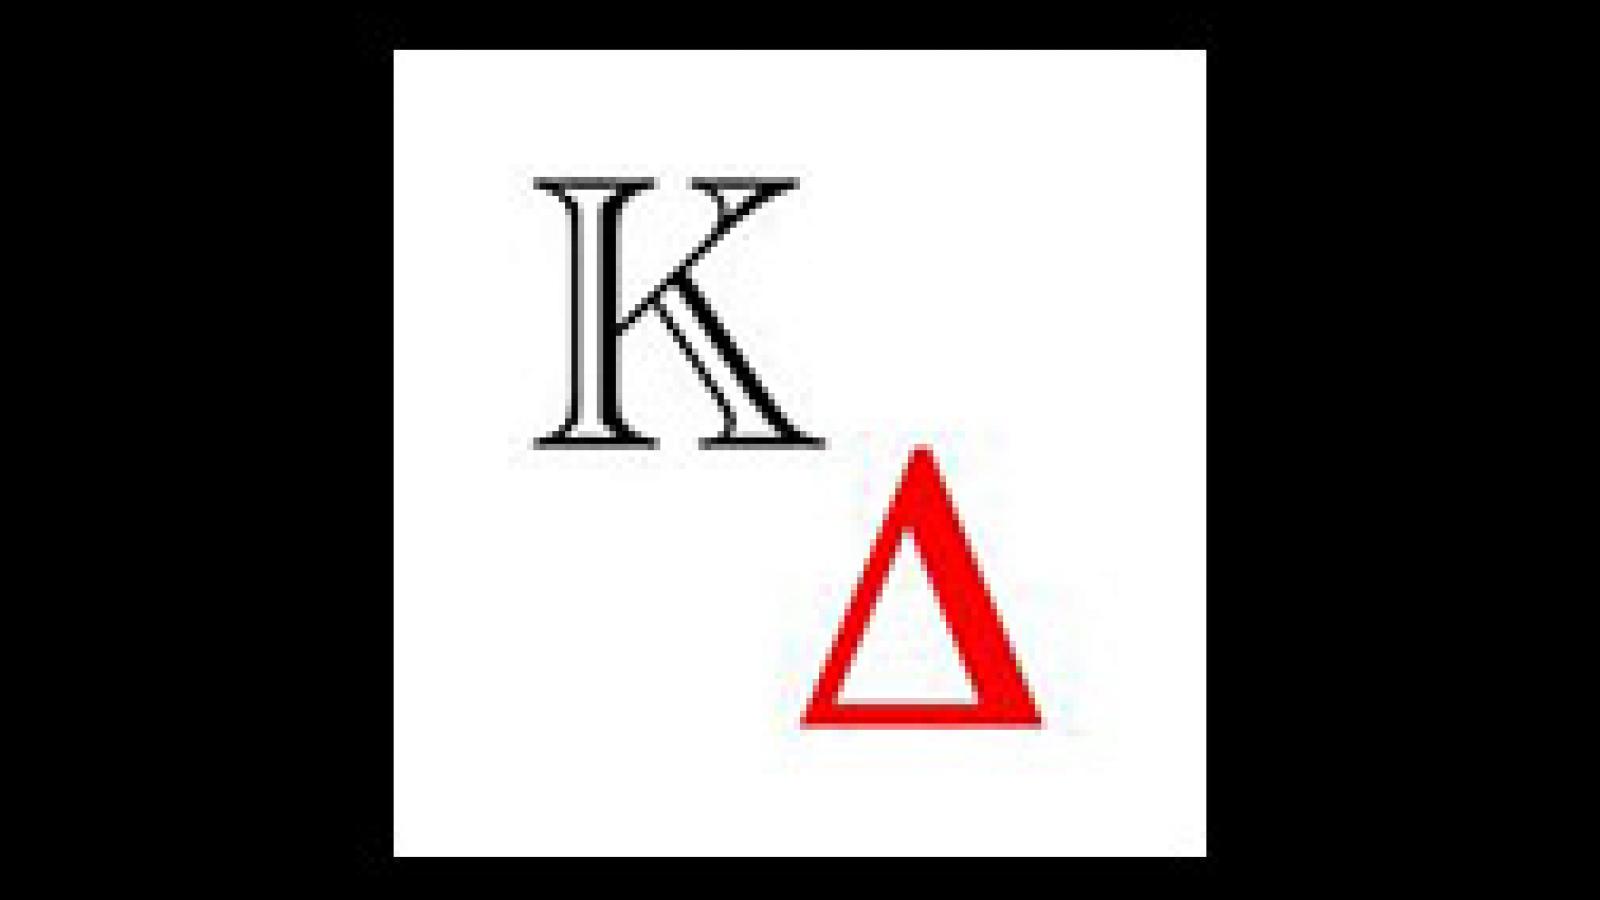 Kappa Delta letters